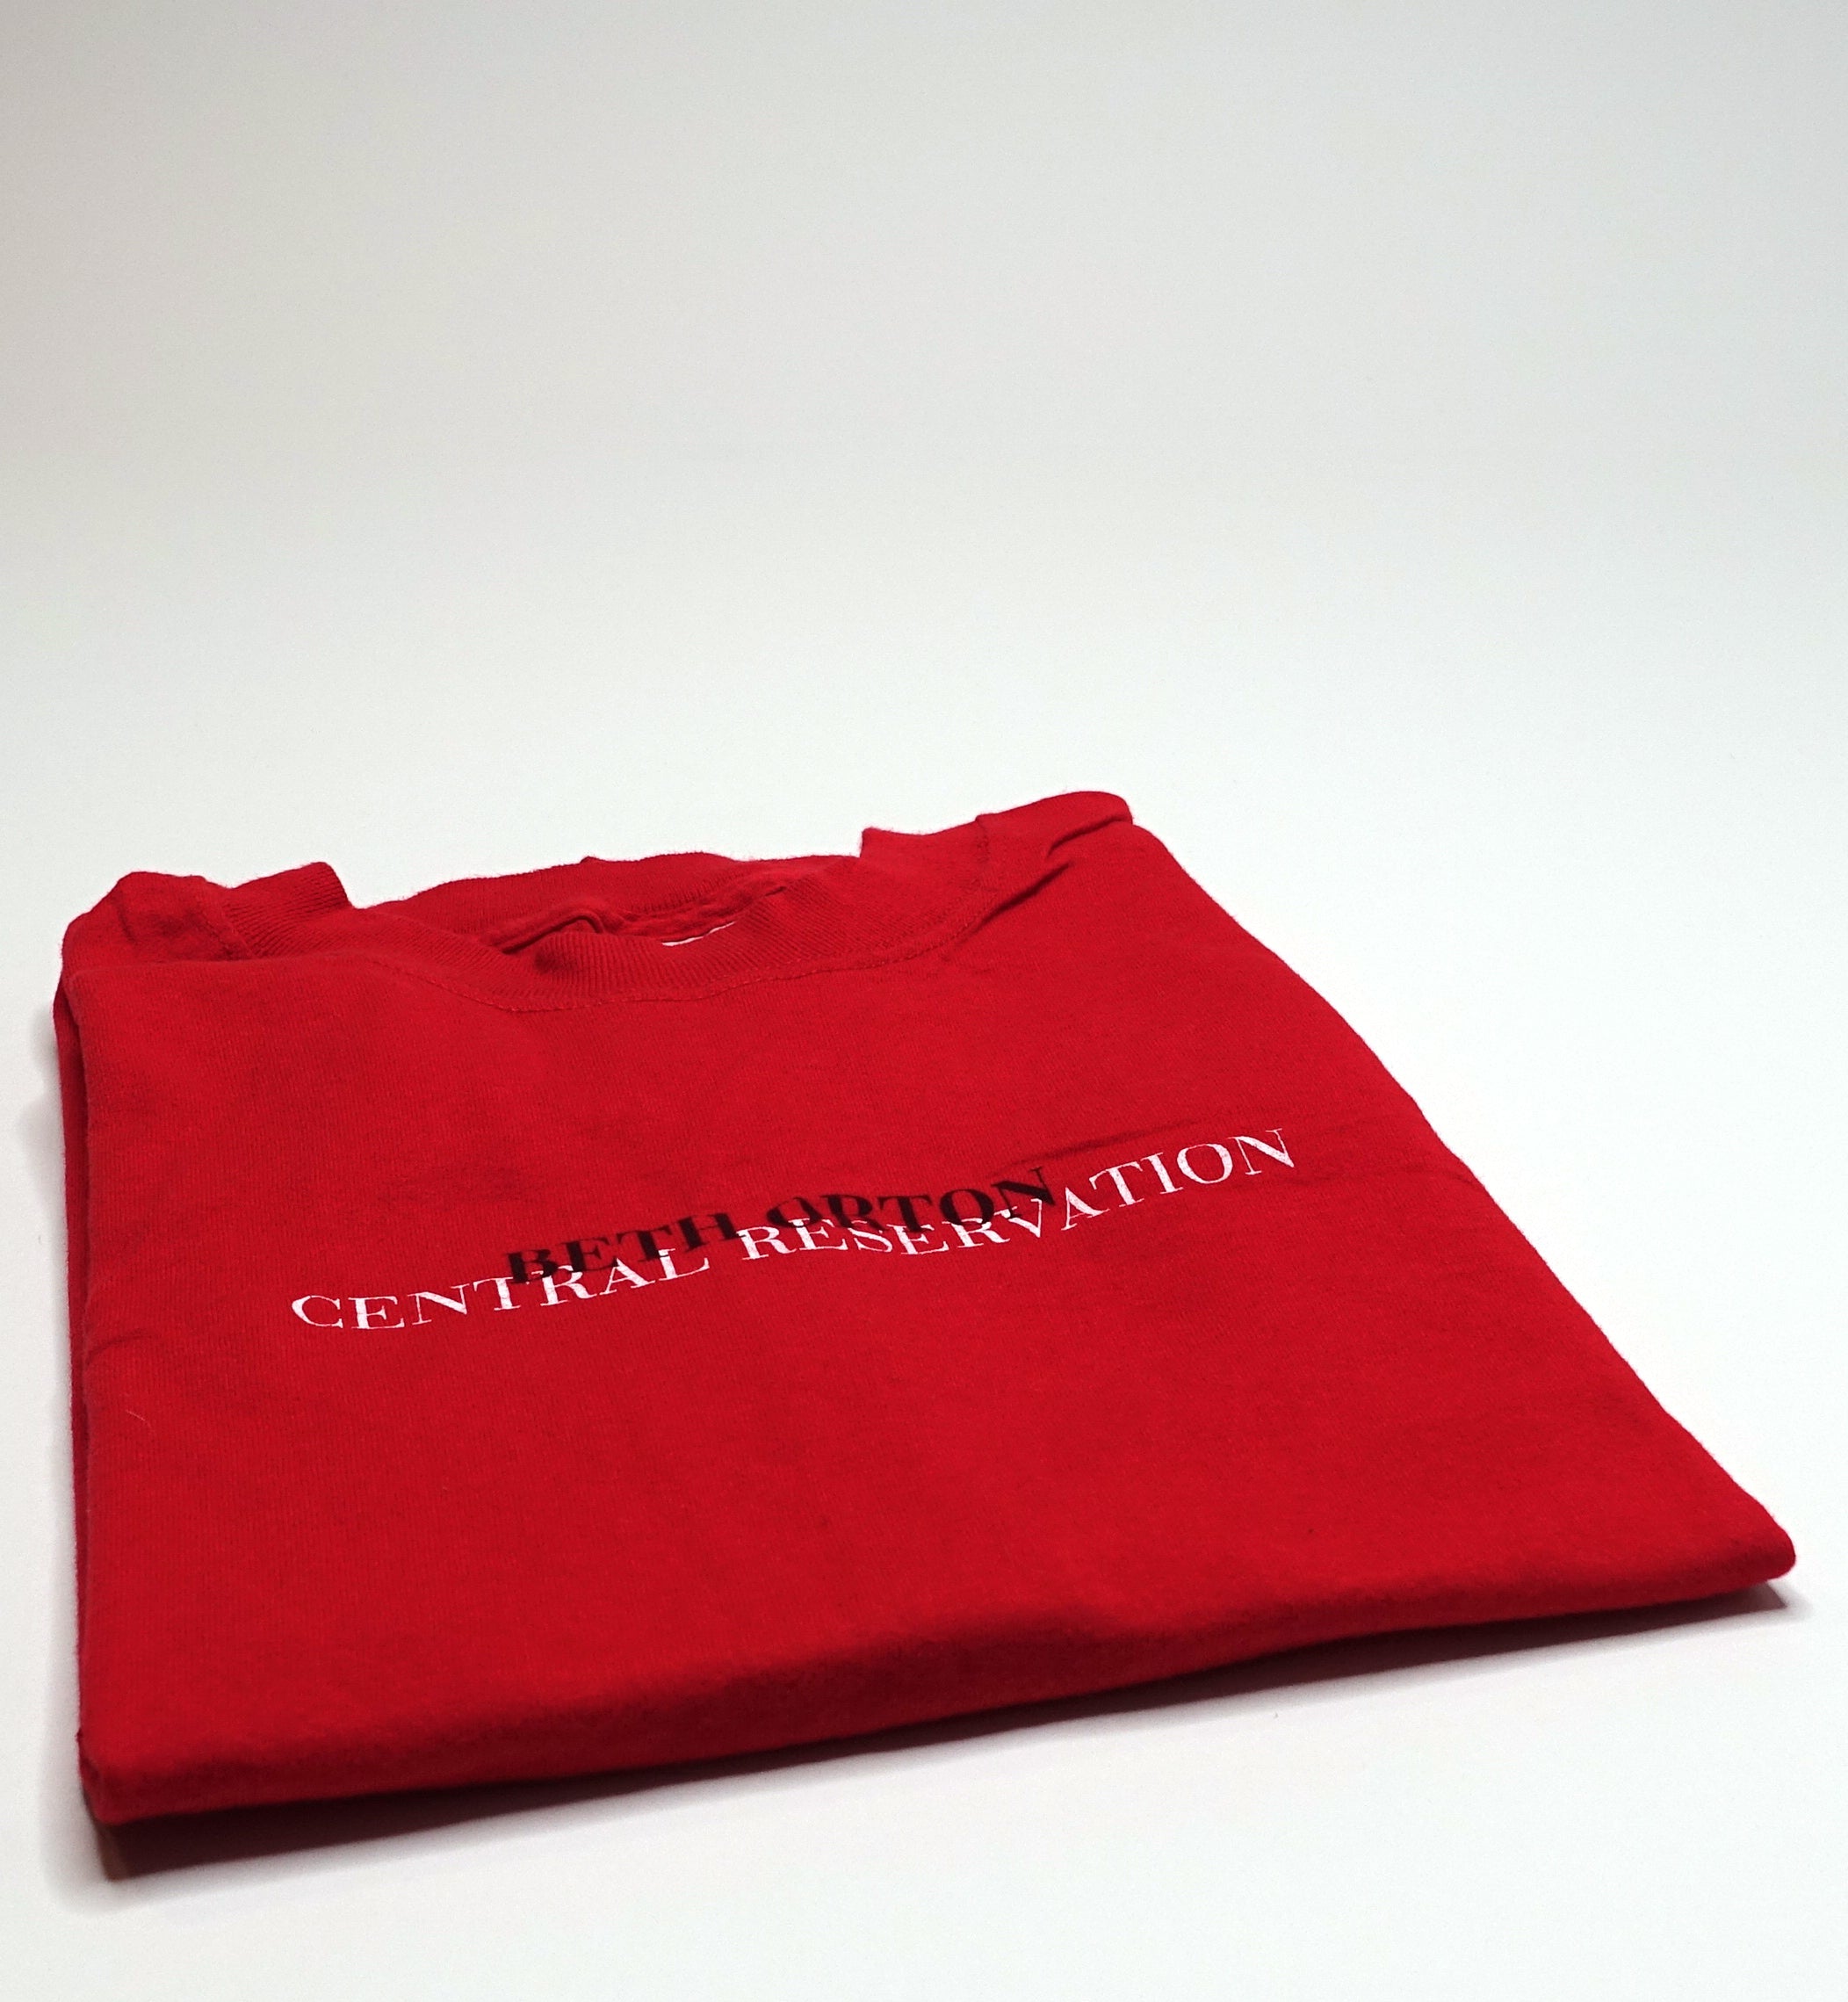 Beth Orton - Central Reservation Text Logo 1998 Tour Shirt Size Large